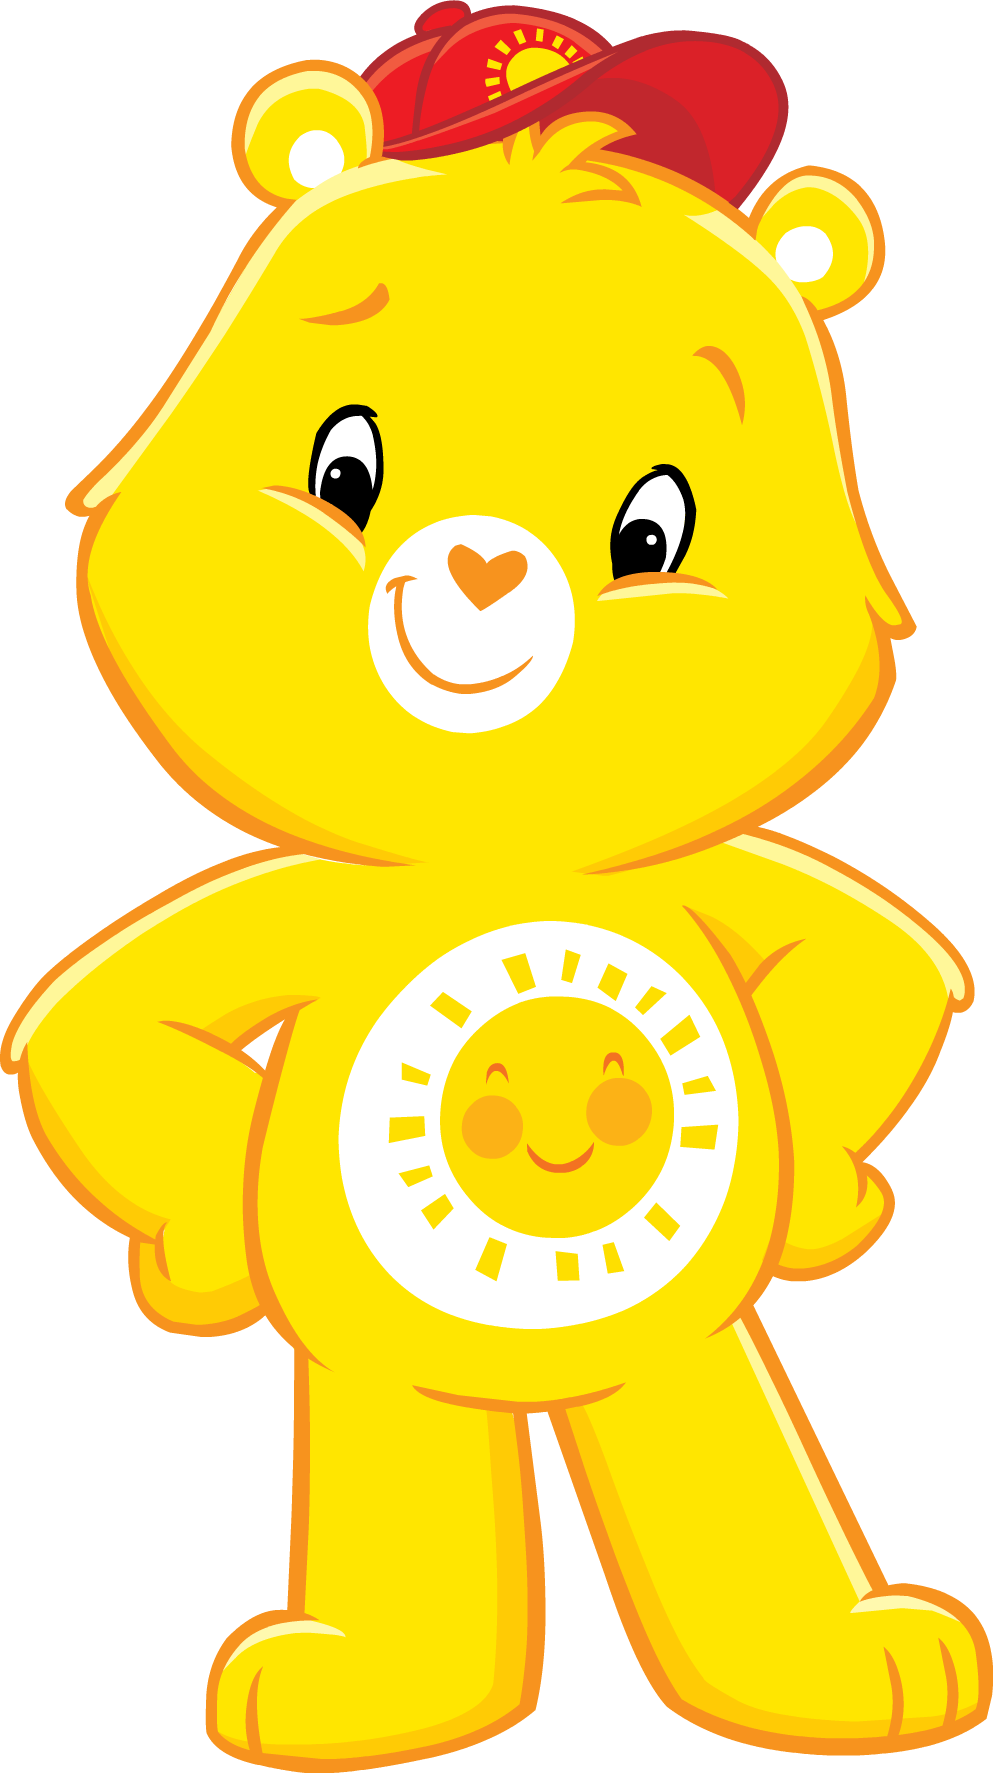 Care Bears Yellow Wrist Band featuring Funshine Bear Wristband Smiling Sun Cuff 